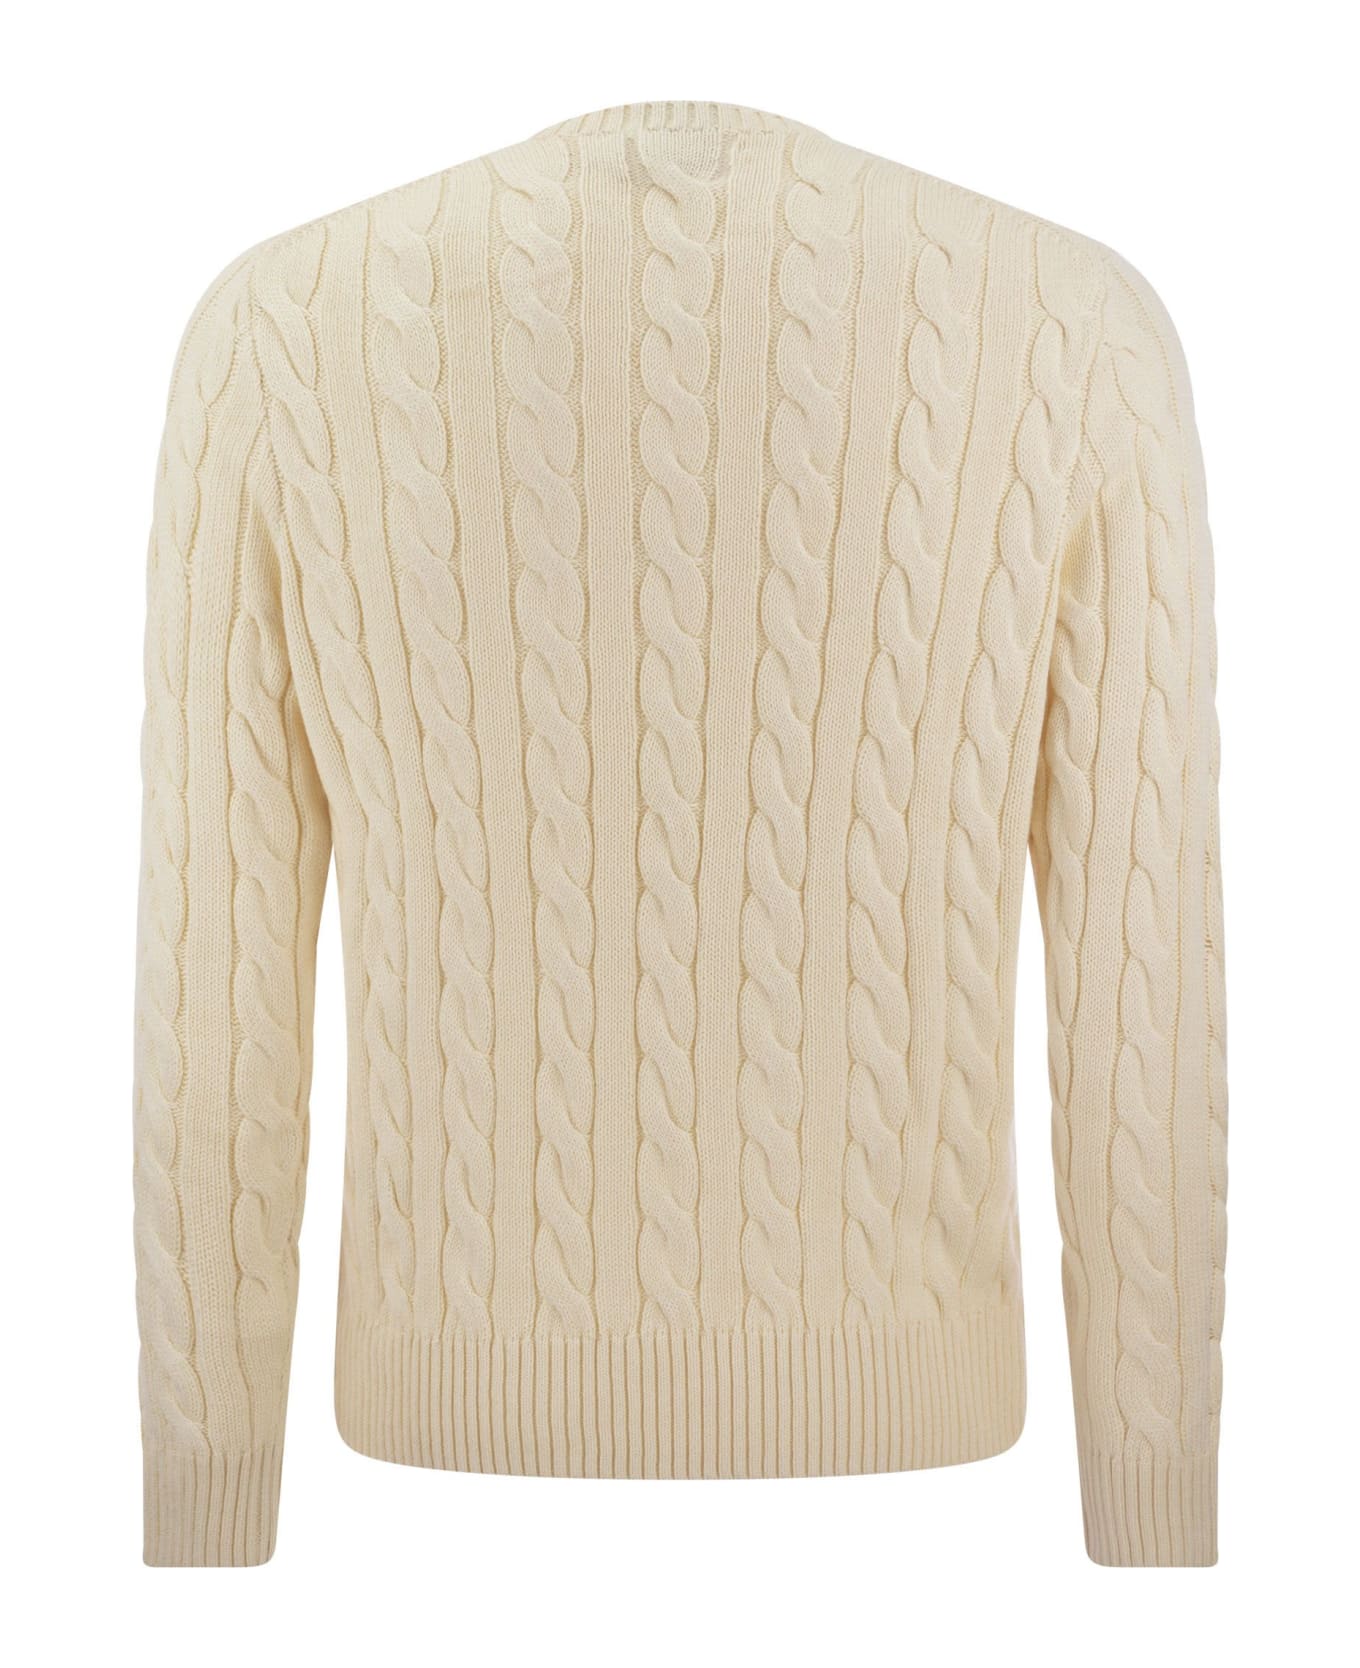 Polo Ralph Lauren Ivory Cotton Sweater - Cream ニットウェア